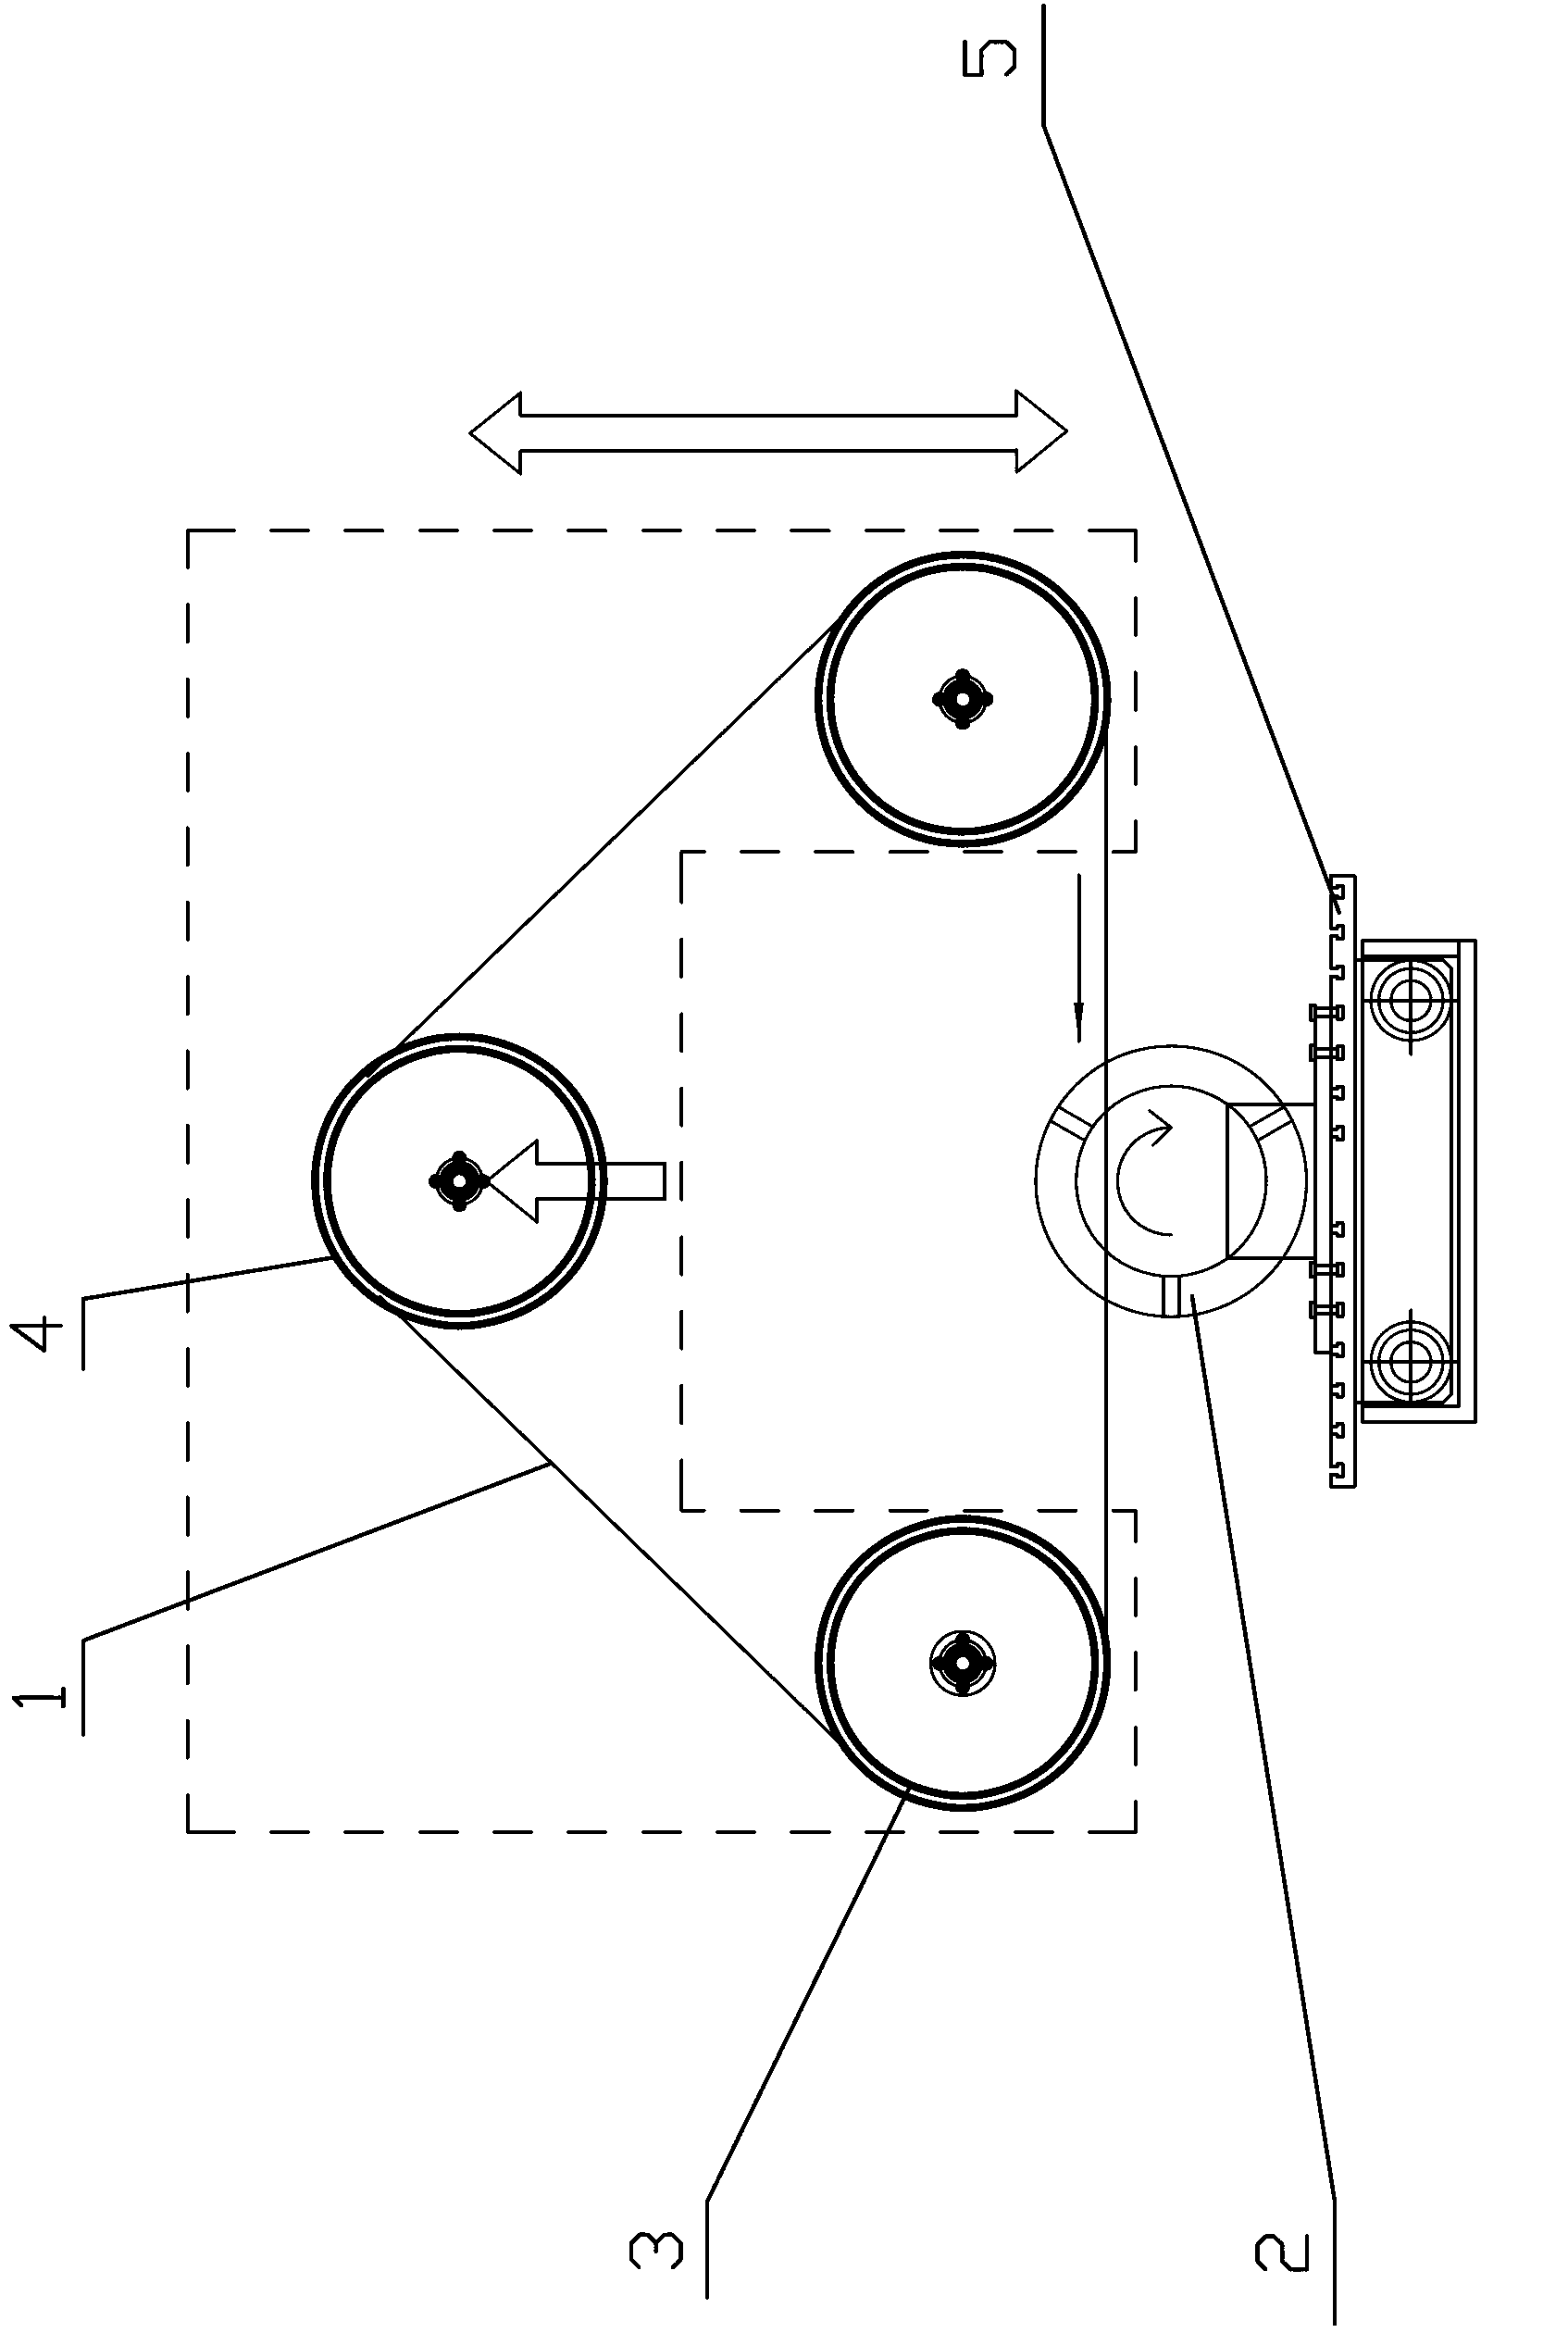 Diamond fretsaw cutting method and device